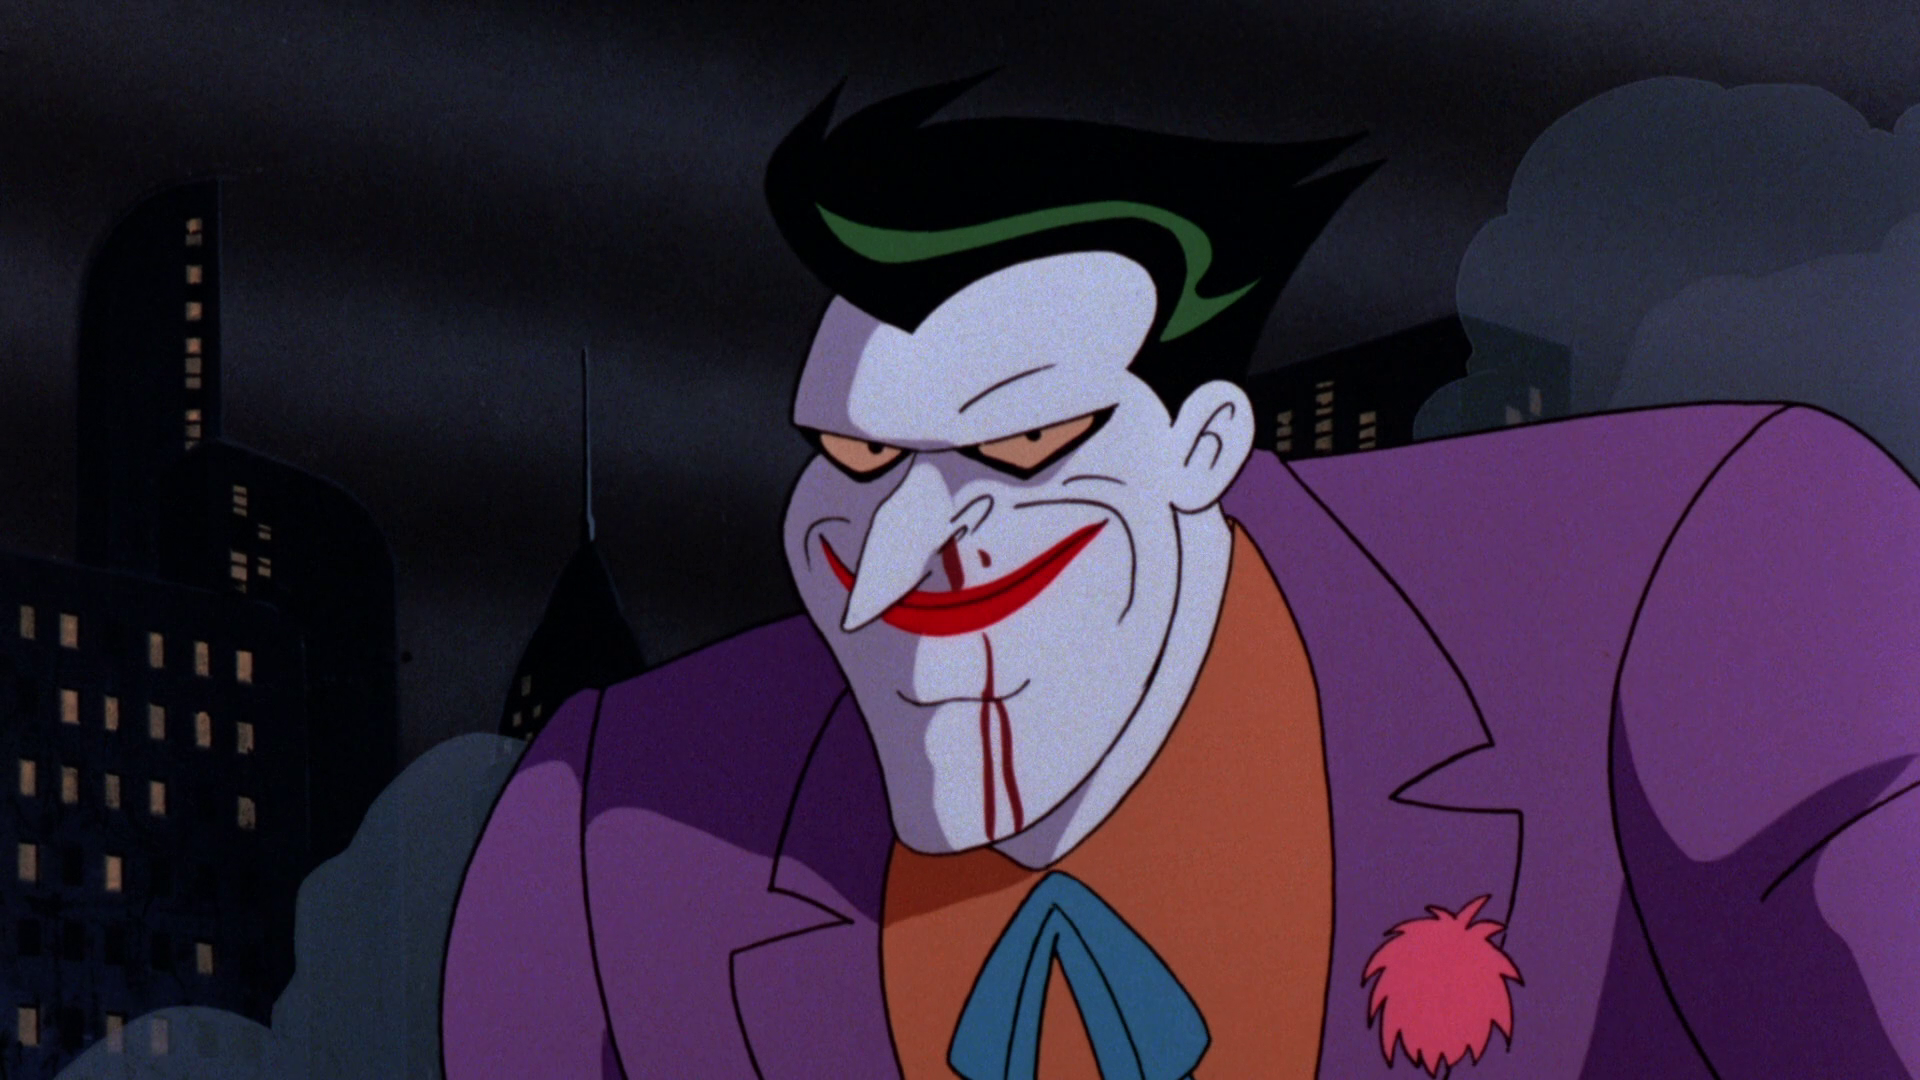 В последние годы злодеям везет 21. Джокер Бэтмен Анимейтед Сериес. Джокер Batman animated Series. Бэтмен маска фантазма Джокер.